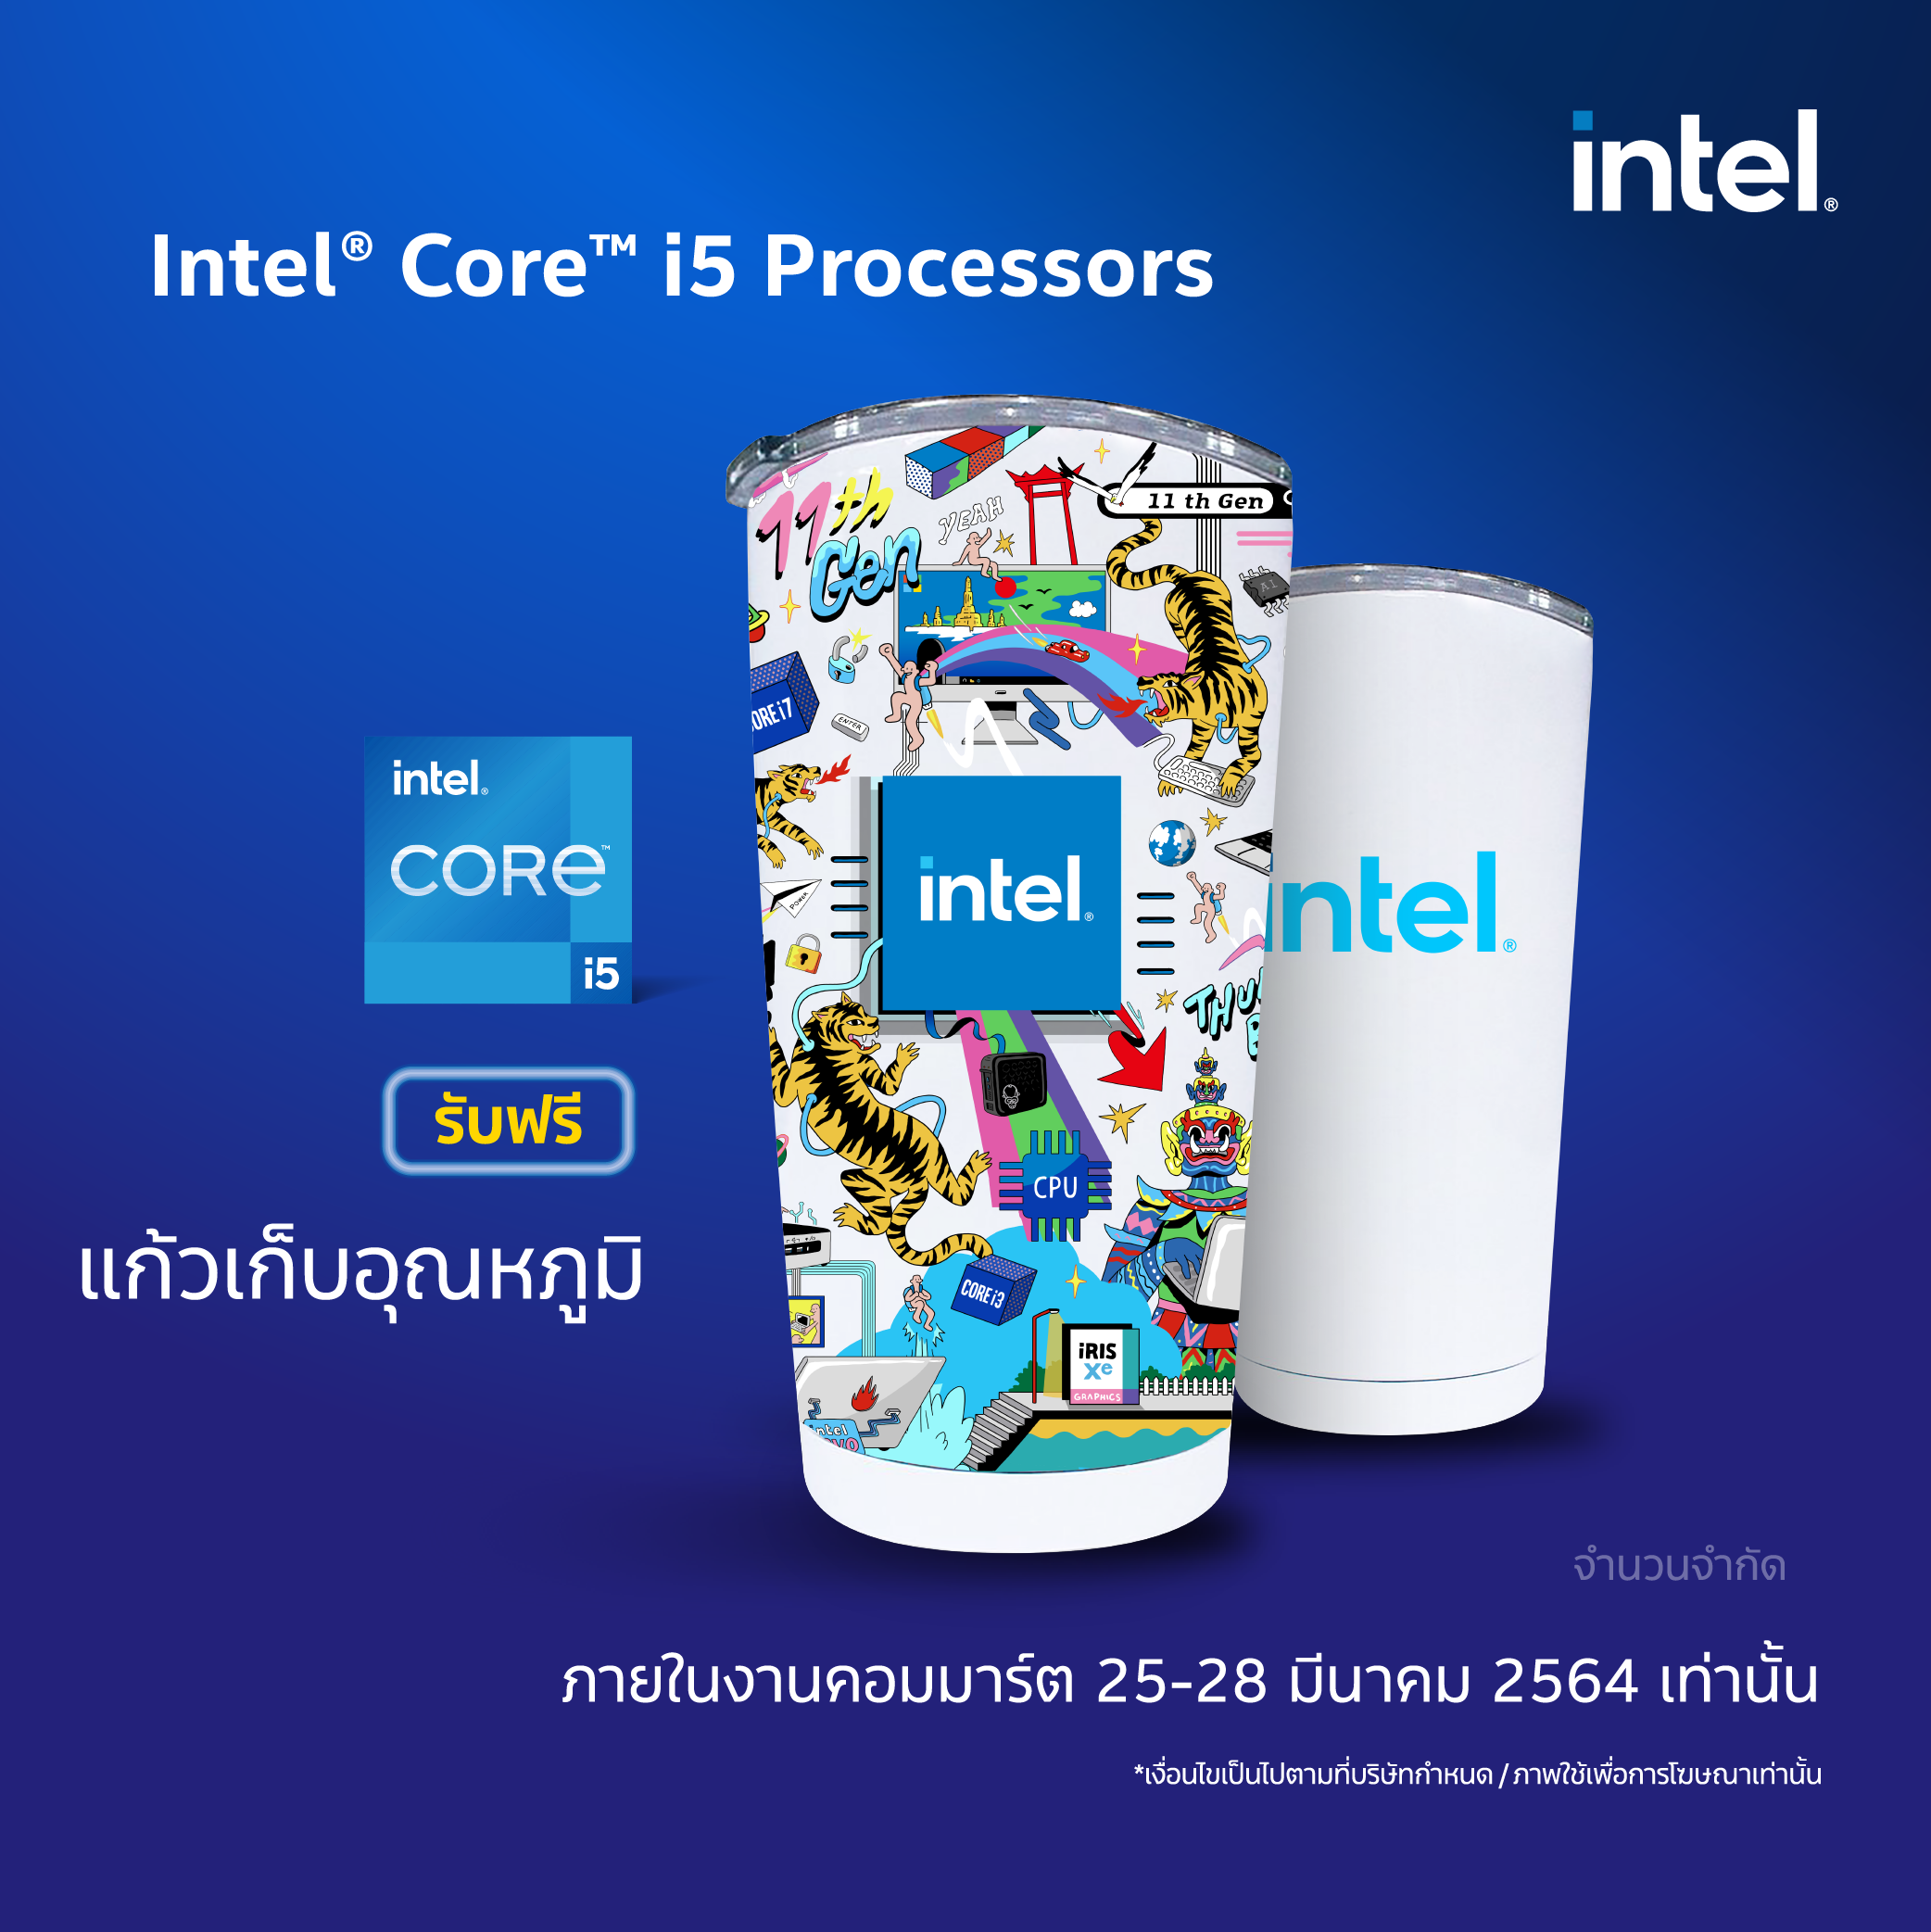 intel commart 5 Intel จัดโปรโมชั่นสุดพิเศษในงานคอมมาร์ท ไบเทค บางนา ตั้งแต่วันนี้ ถึง 28 มีนาคม 2564 รับของแถมสุดพิเศษมากมายเมื่อซื้อผลิตภัณฑ์จากทาง Intel 